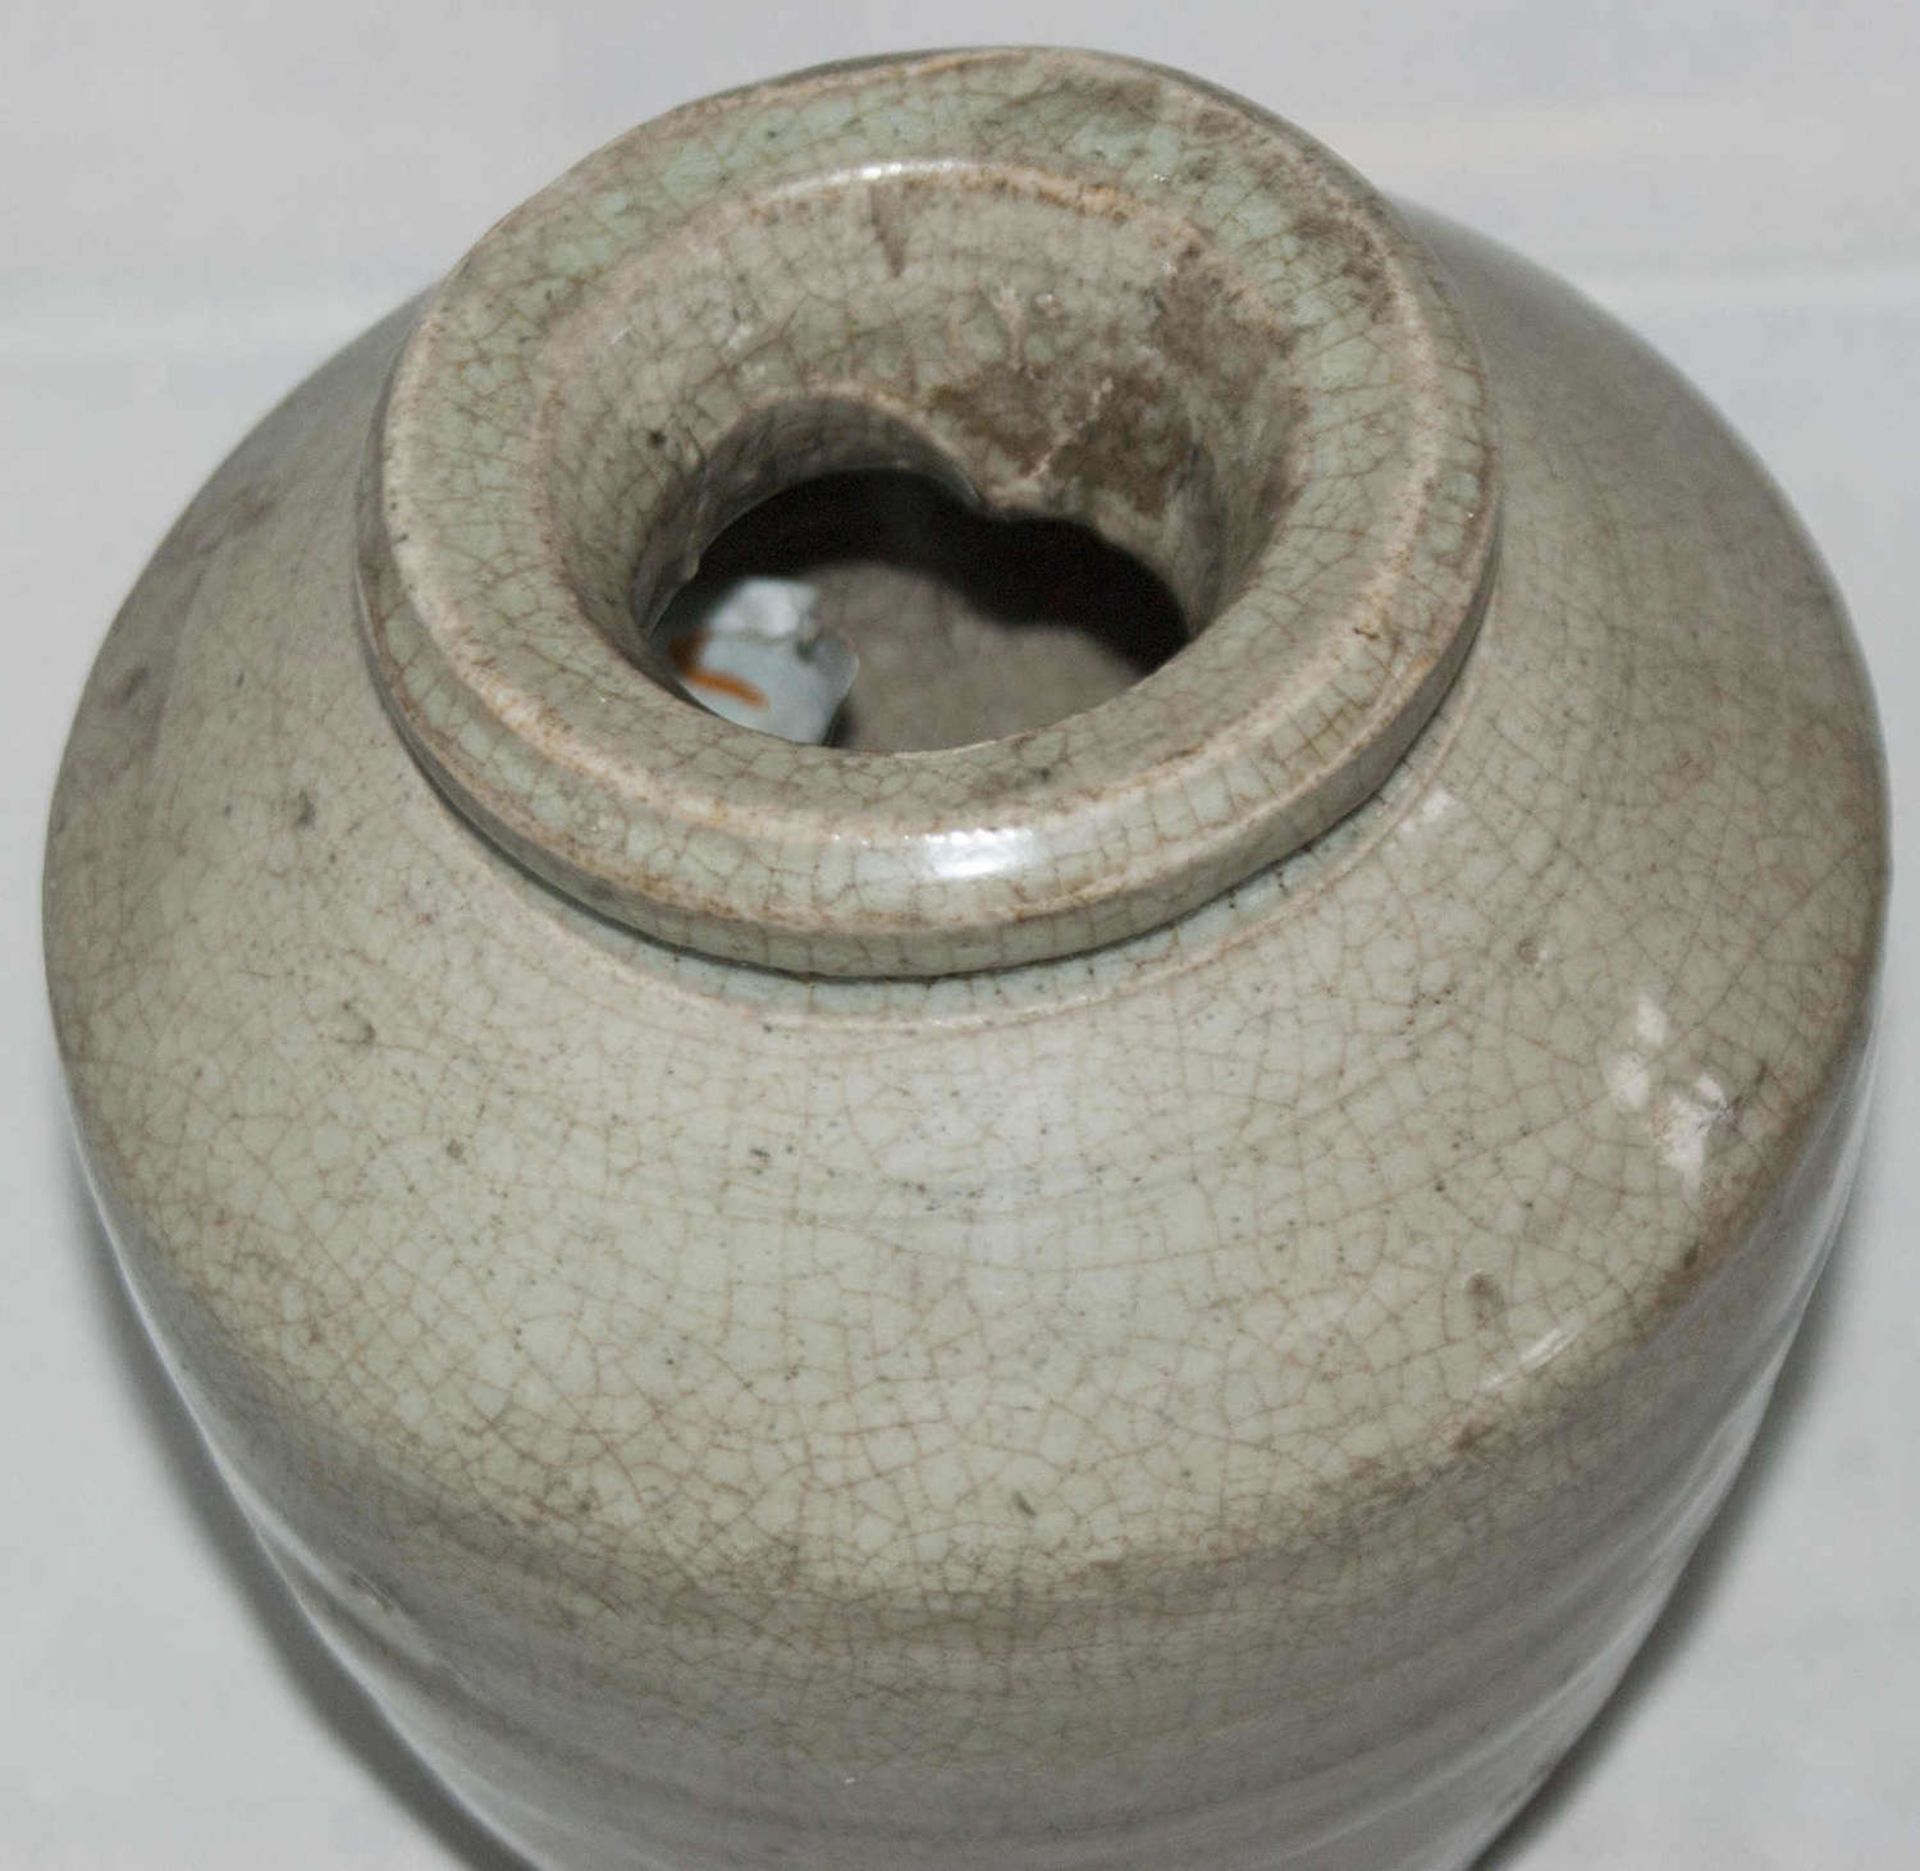 Southern Song Dynastie, 1127-1279. China Stone Vase in sehr guter Erhaltung, aus alter Sammlung. - Image 3 of 4